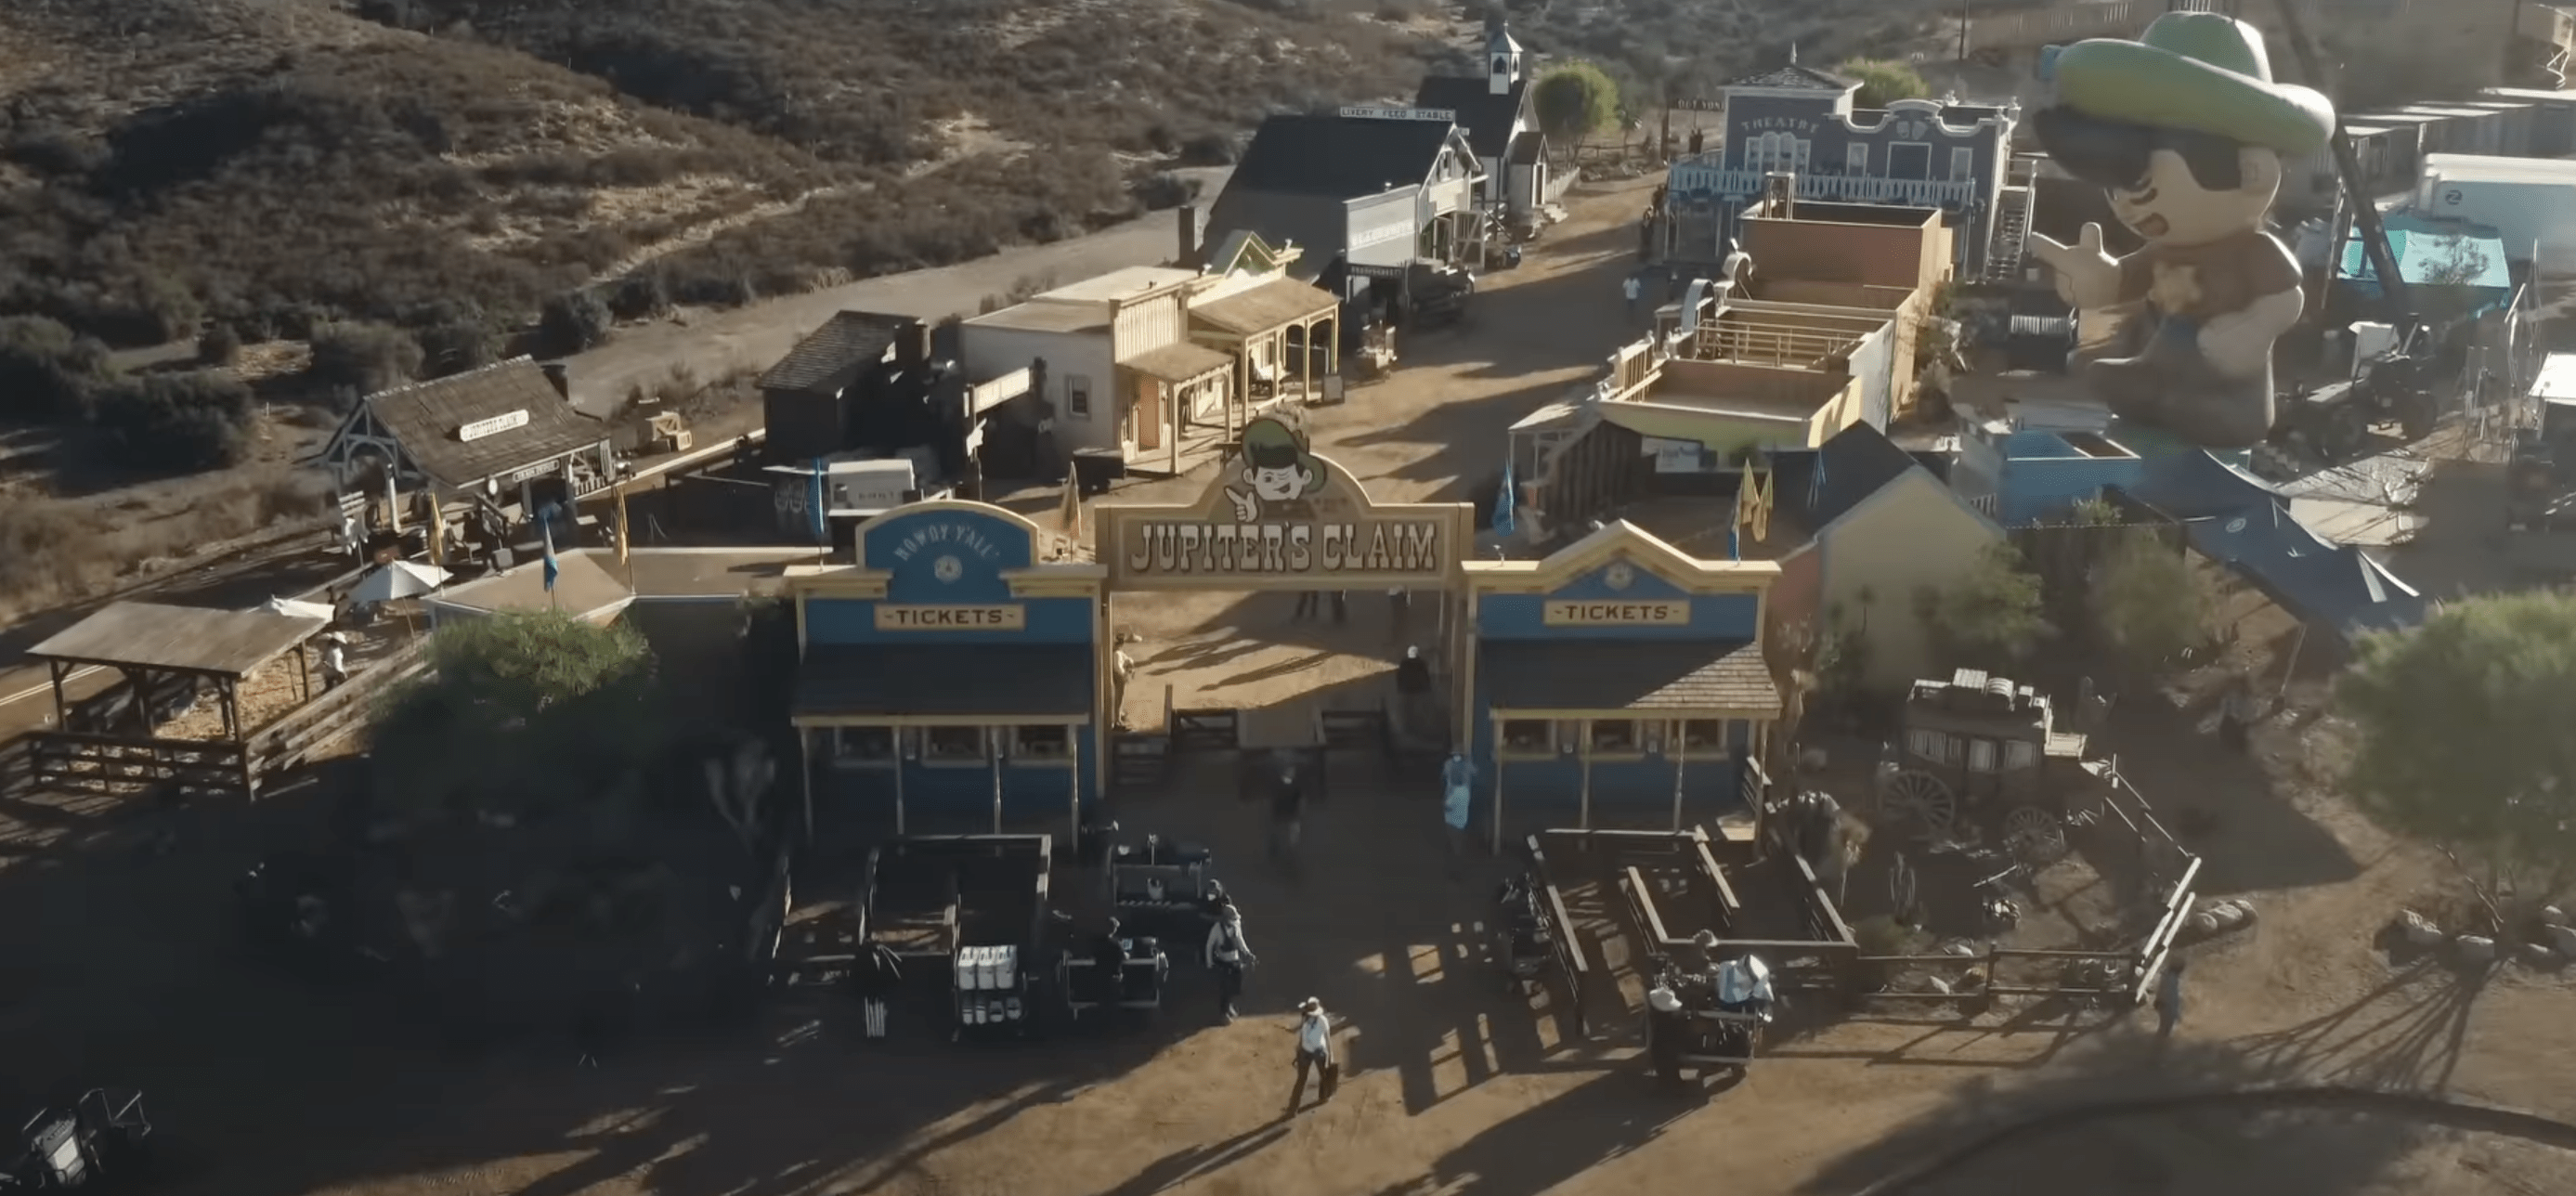 The Nope set on location in Santa Clarita, CA. (Screenshot: Universal Pictures)